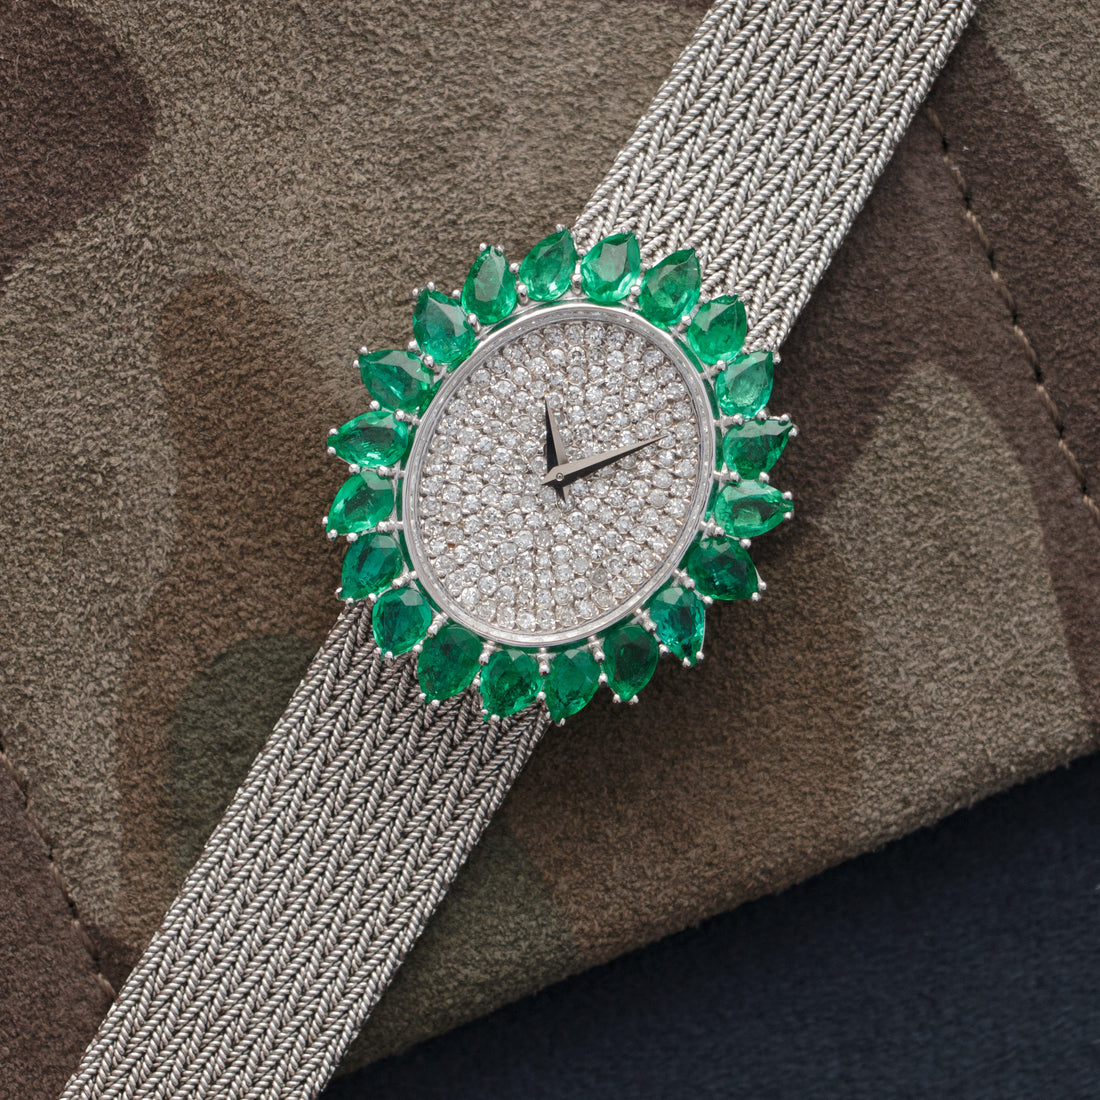 Vacheron Constantin White Gold Diamond & Emerald Watch